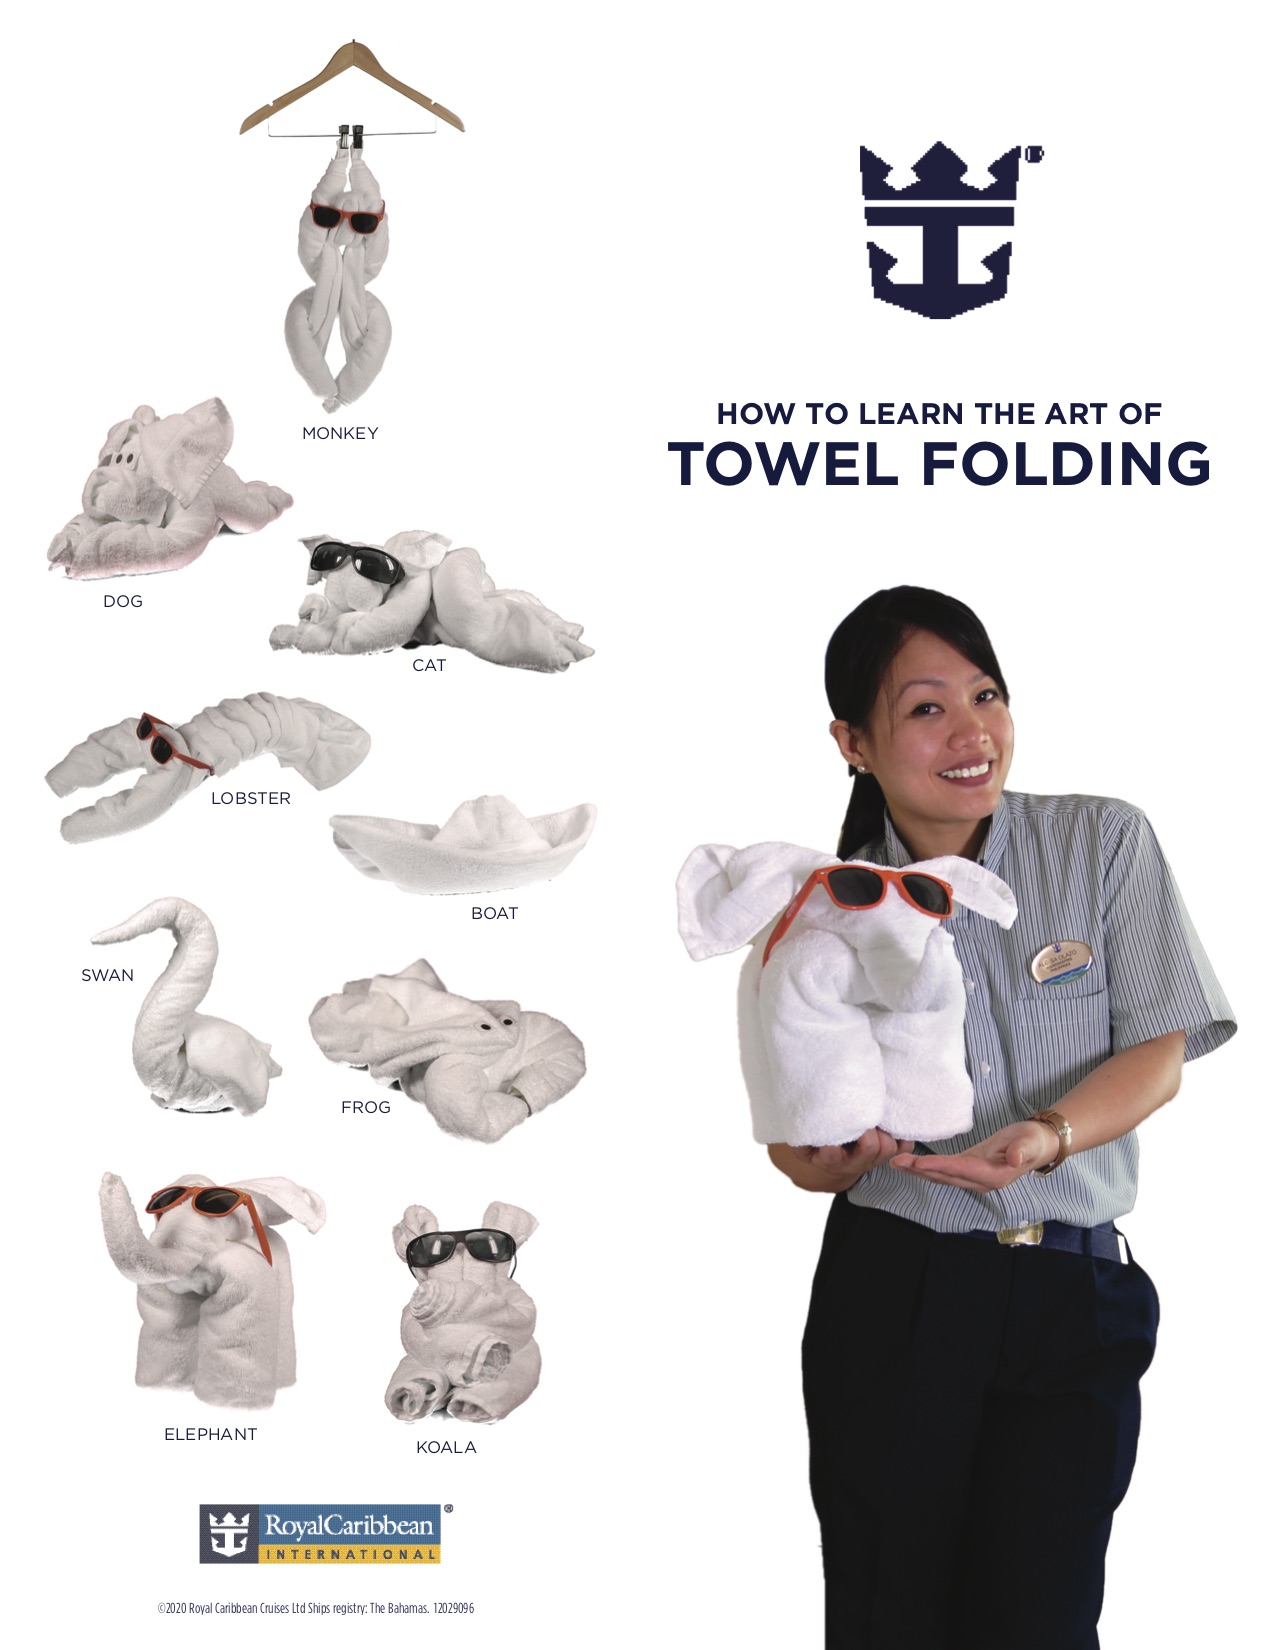 Royal Caribbean: The Art of Towel Folding - Must Love Travel